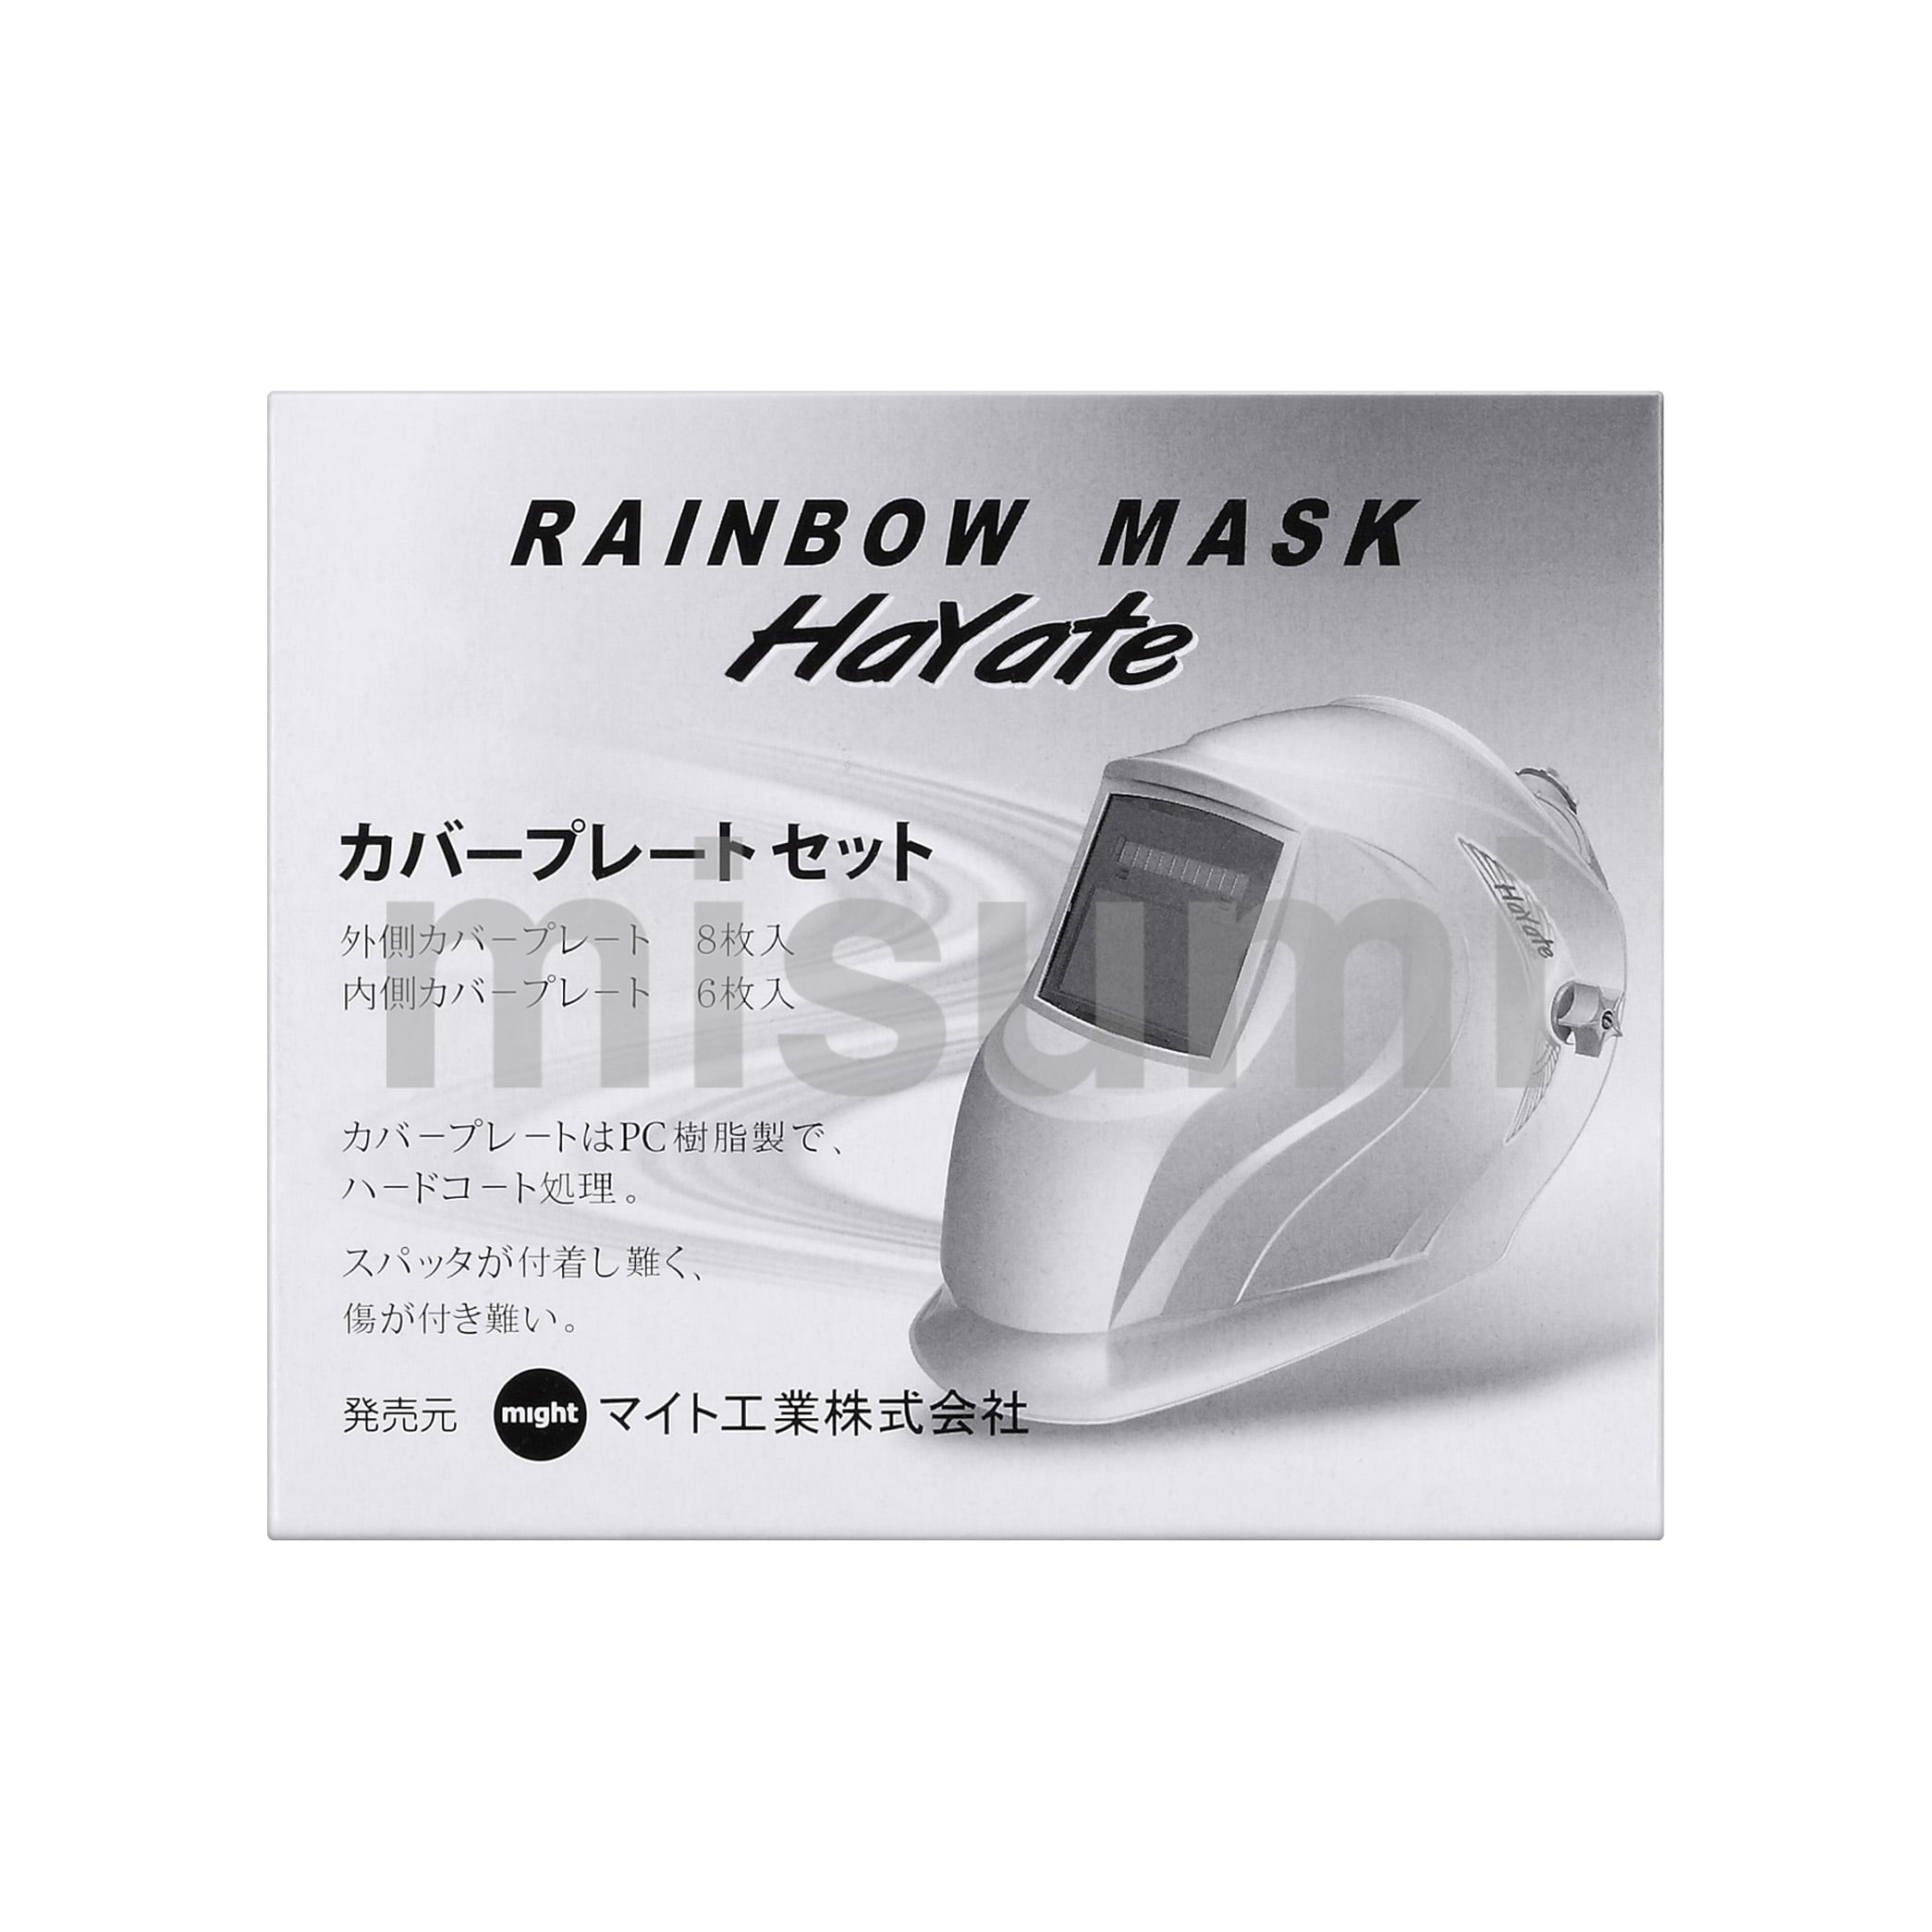 CVP-760PI 溶接面 レインボーマスクシリーズ用カバープレート マイト工業 MISUMI(ミスミ)